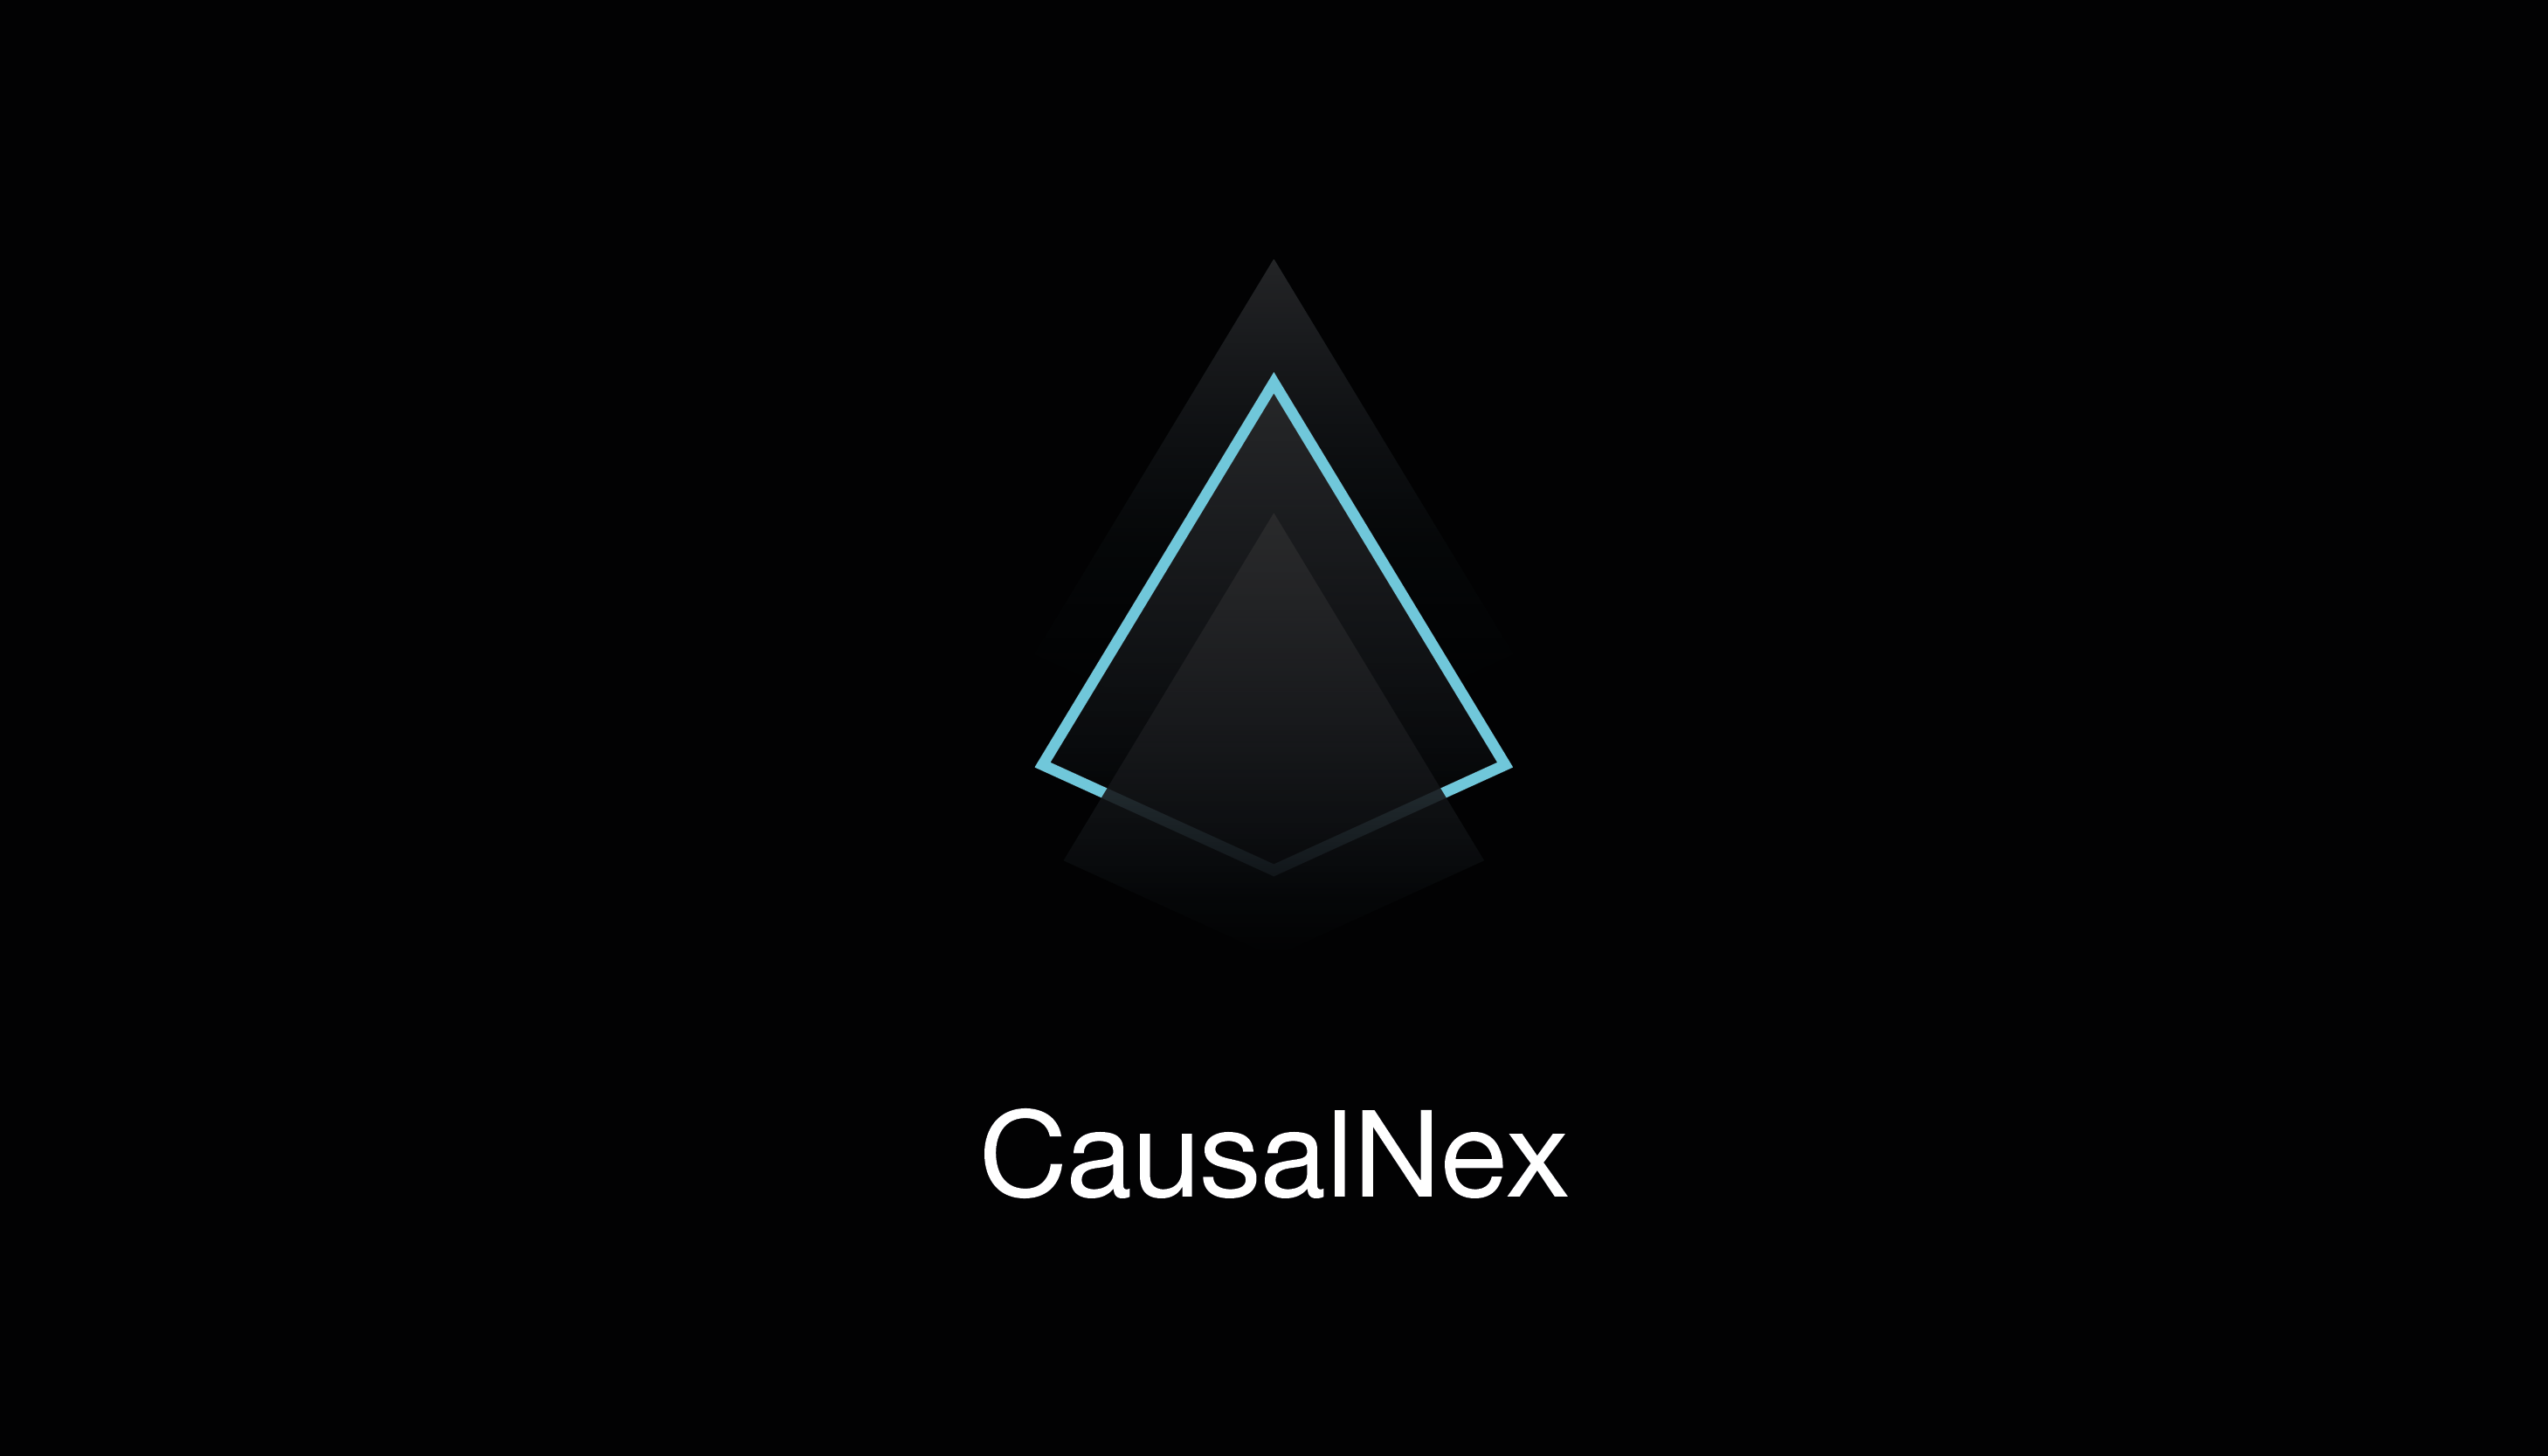 CausalNex